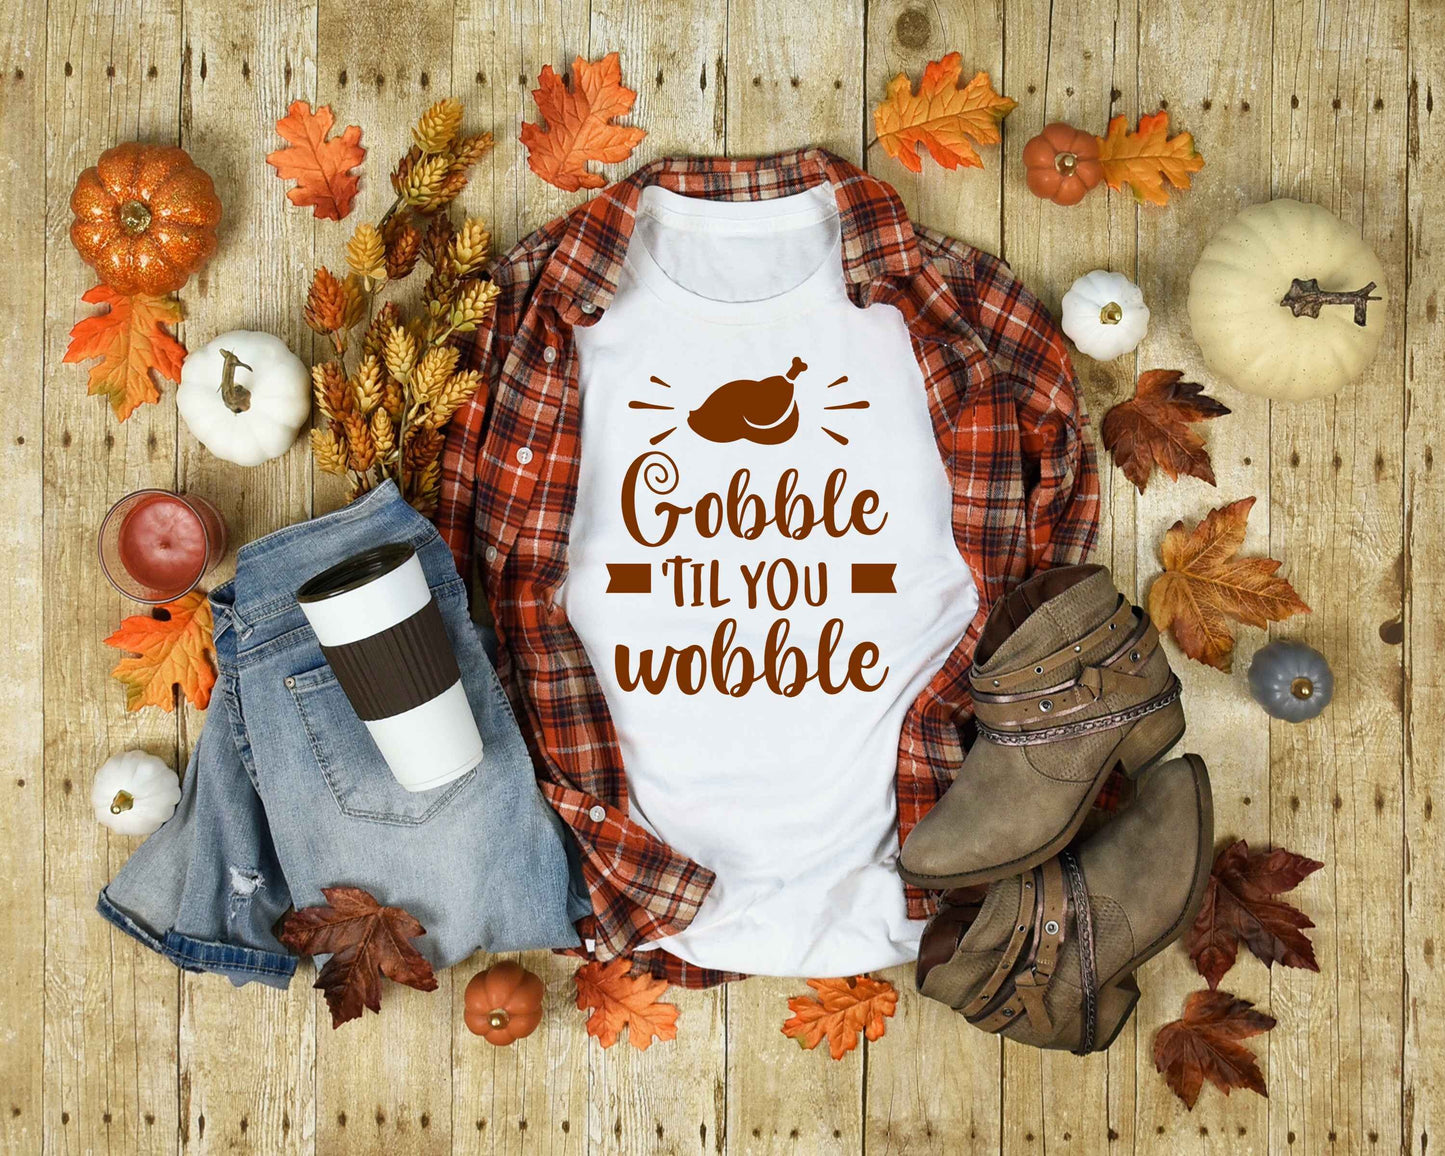 Gobble Til You Wobble unisex t-shirt -  Thanksgiving Shirt - Fall Shirt - Funny Thanksgiving - Turkey Shirt